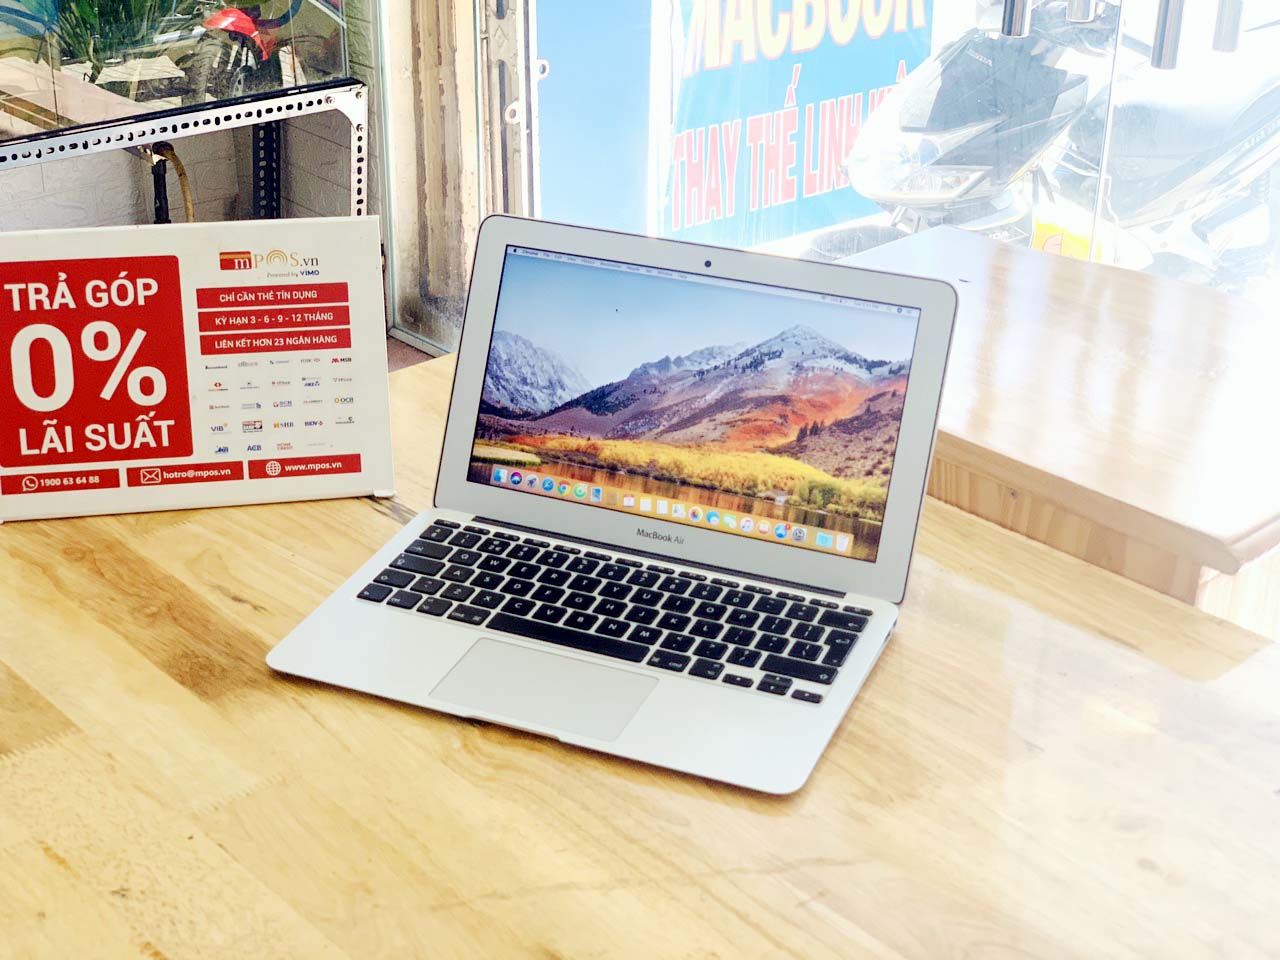 Macbook Air 11” 2013 Core i5 Ram 4G SSD 128G 11 inch Like New